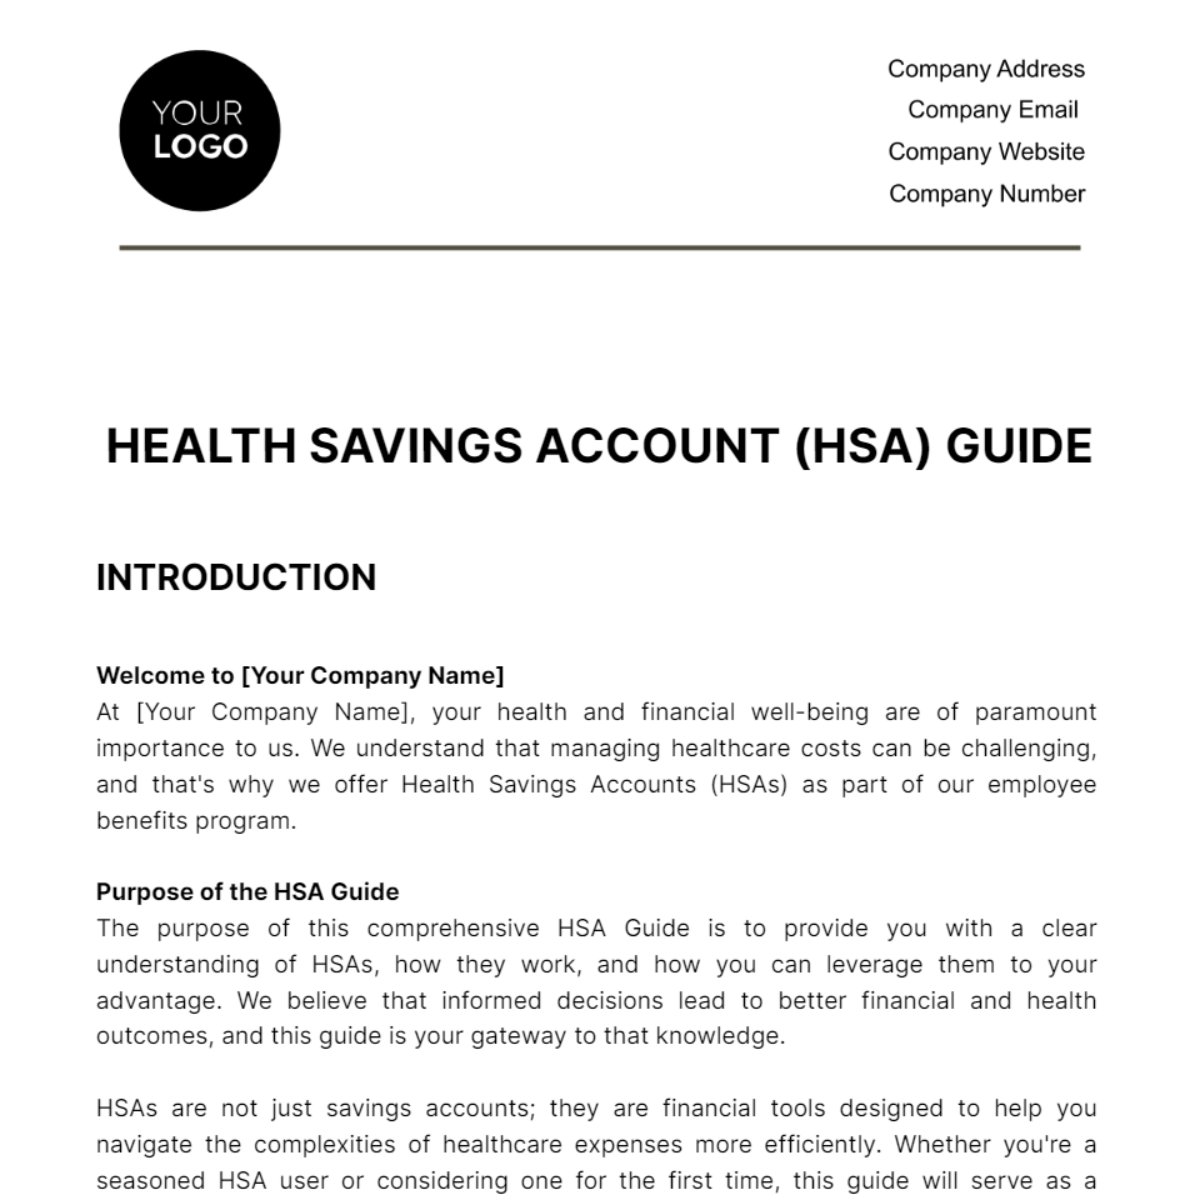 Health Savings Account (HSA) Guide HR Template